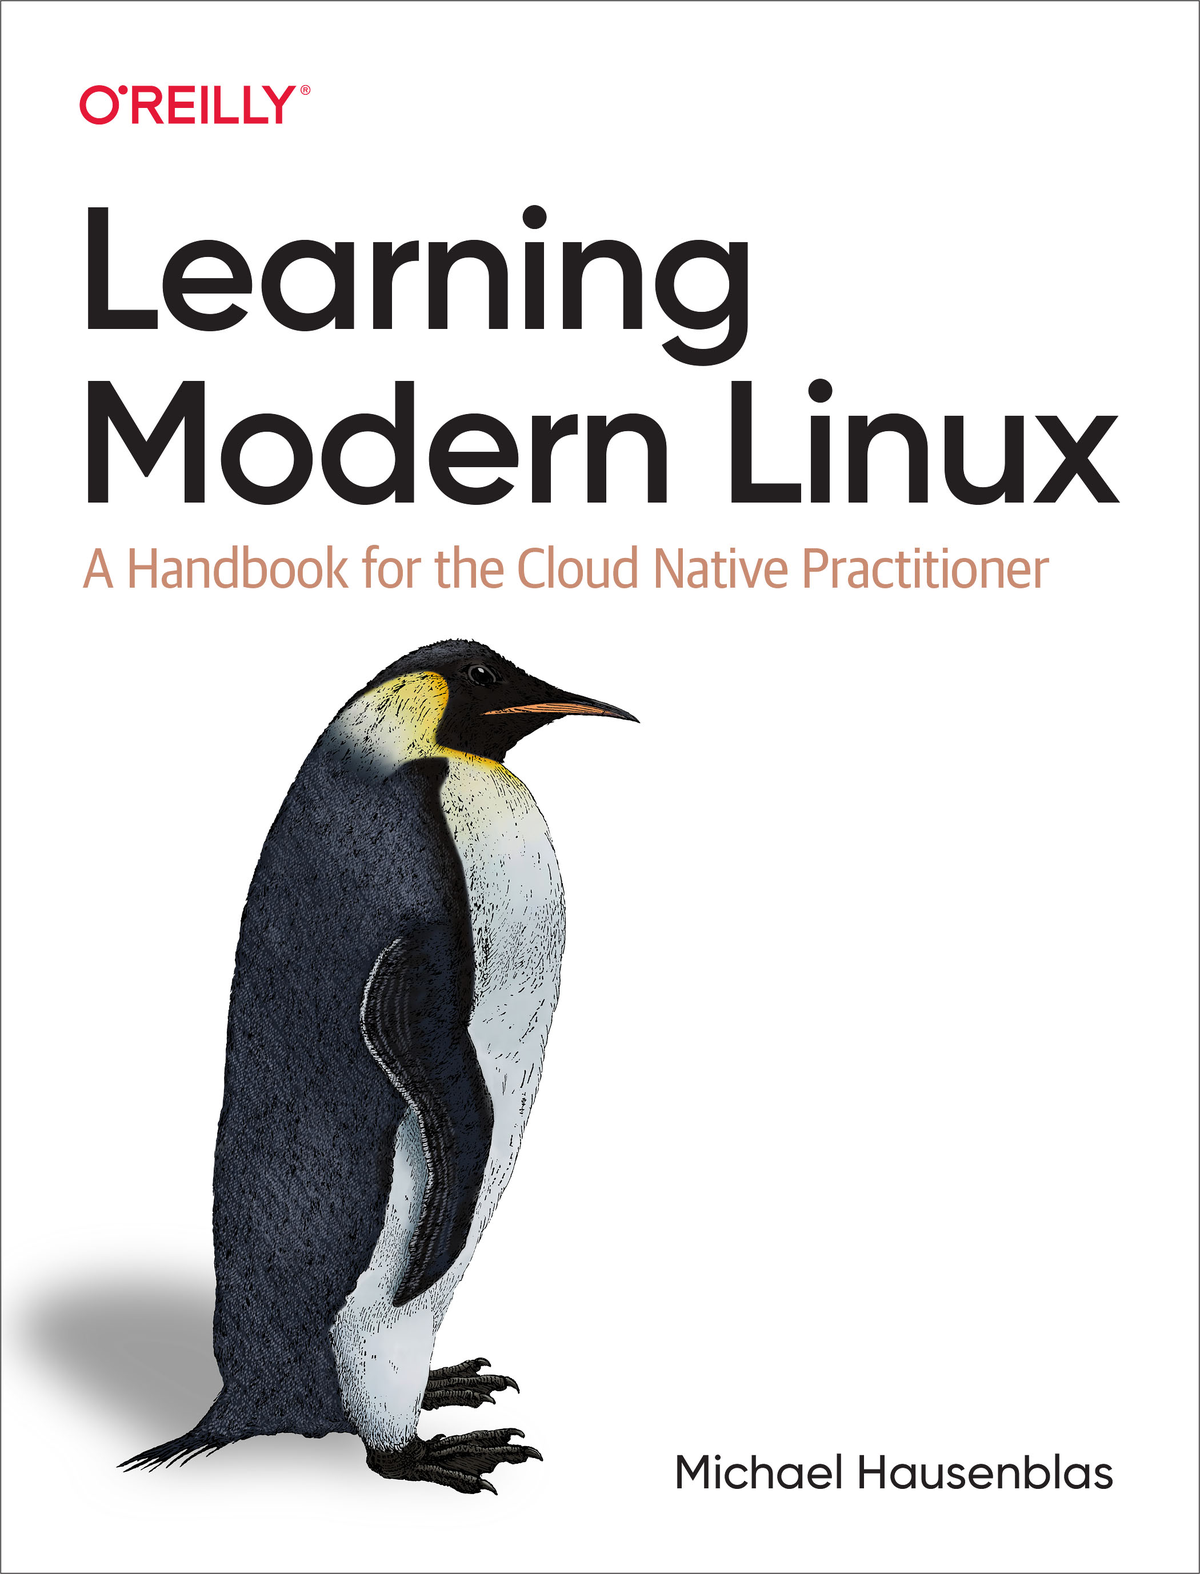 Learning Modern Linux by Michael Hausenblas Copyright 2022 Michael Hausenblas - photo 1